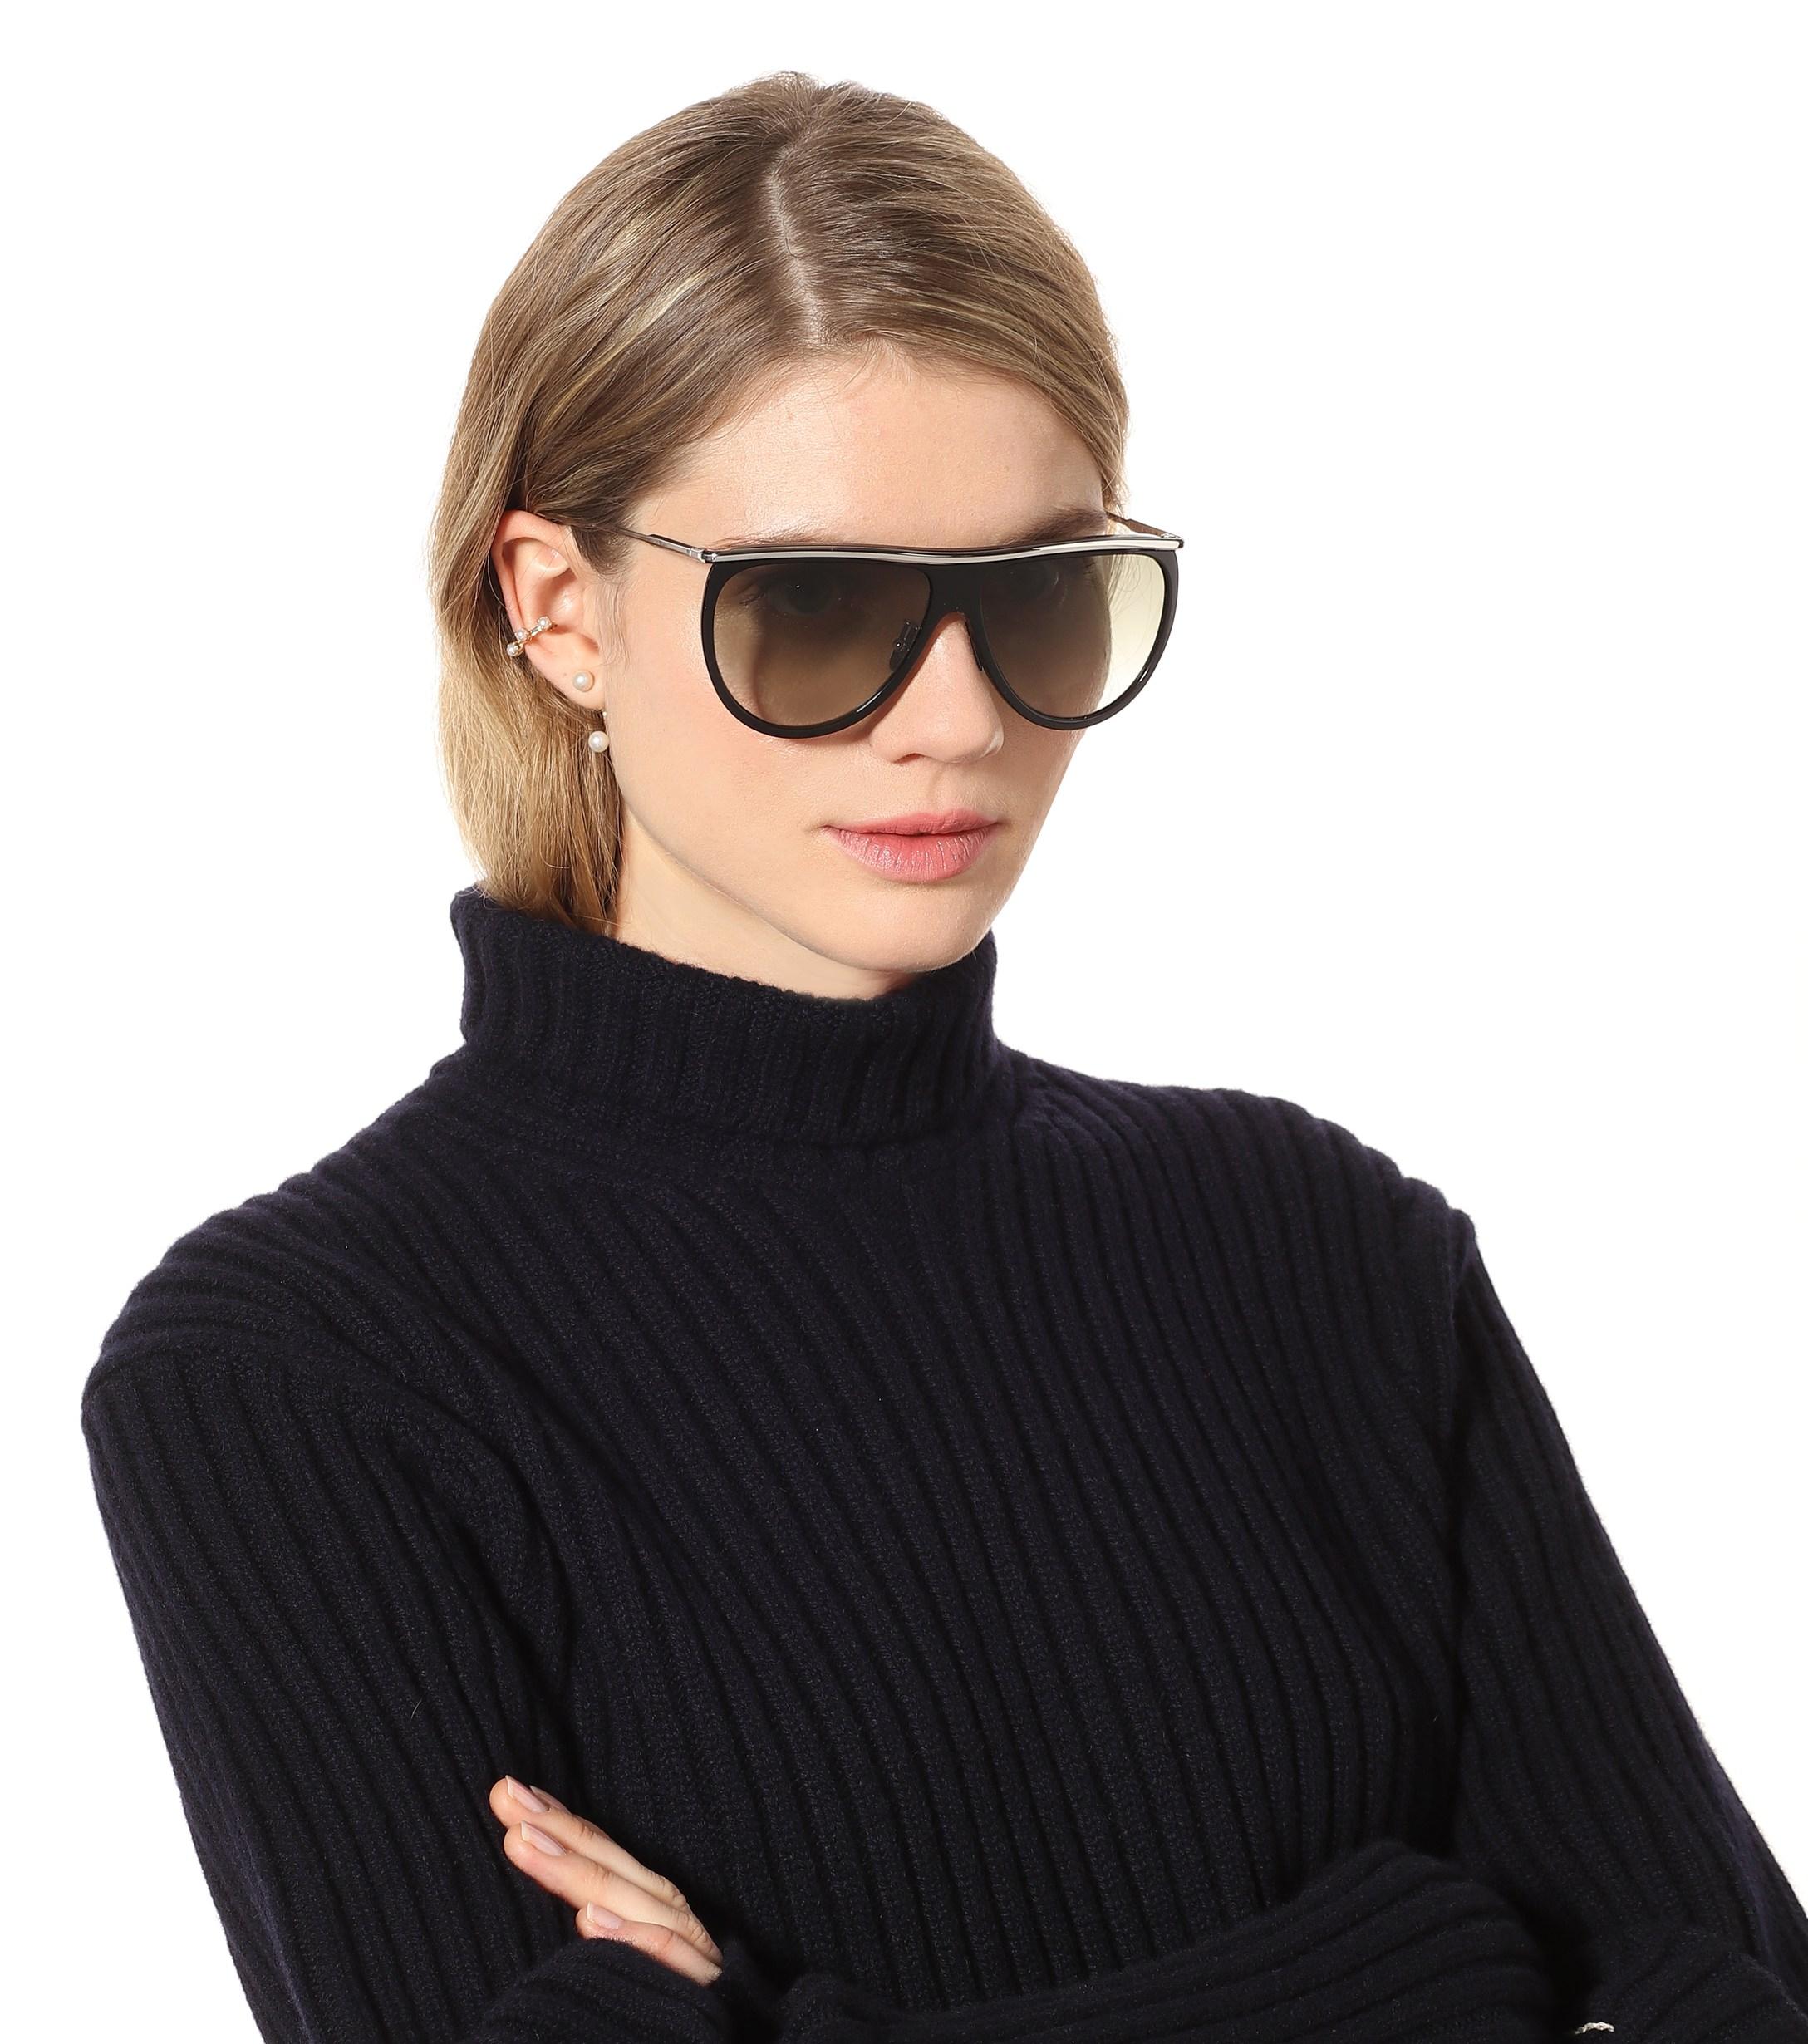 Victoria Beckham Half Moon High Brow Sunglasses in Black - Lyst